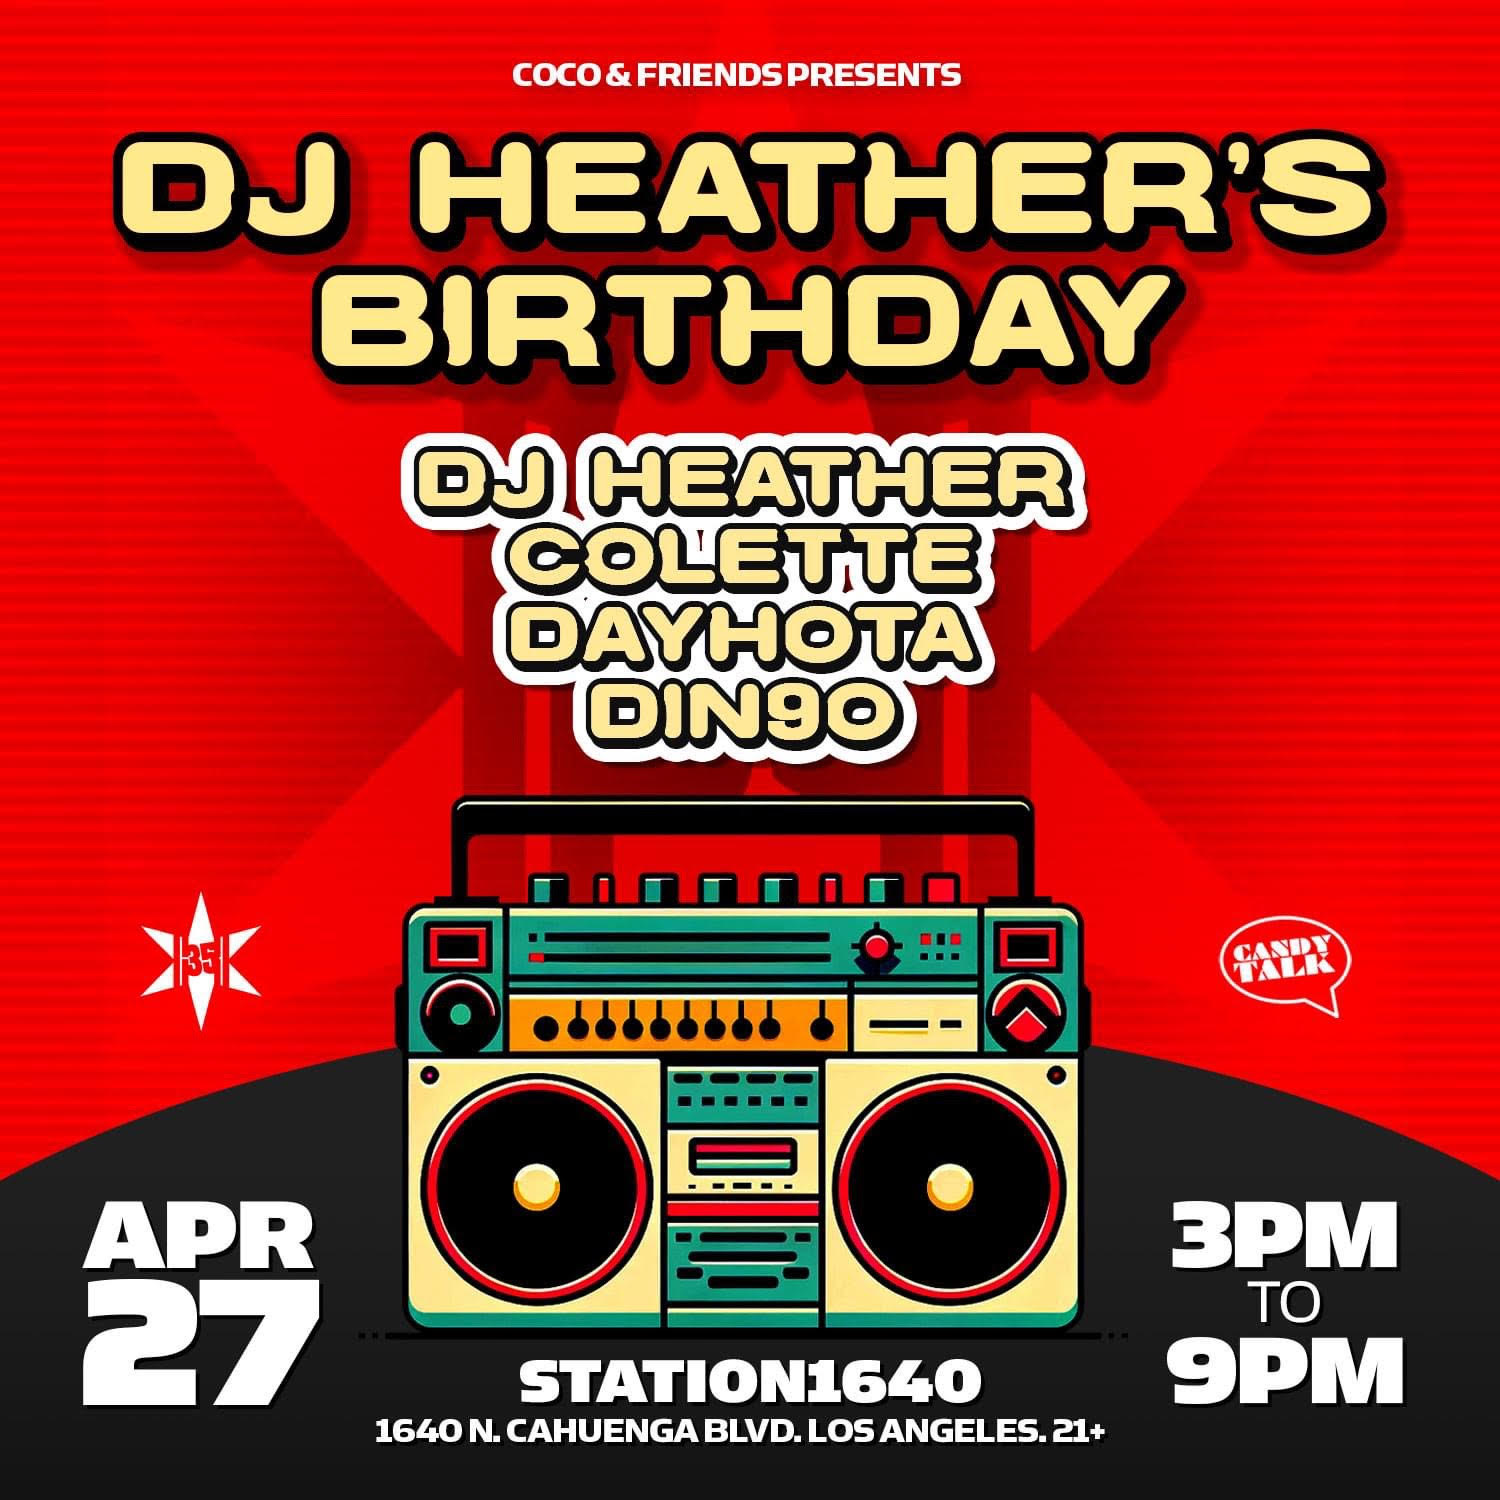 DJ Heather’s Birthday with DJ Heather, Colette, Dayhota and Din9o